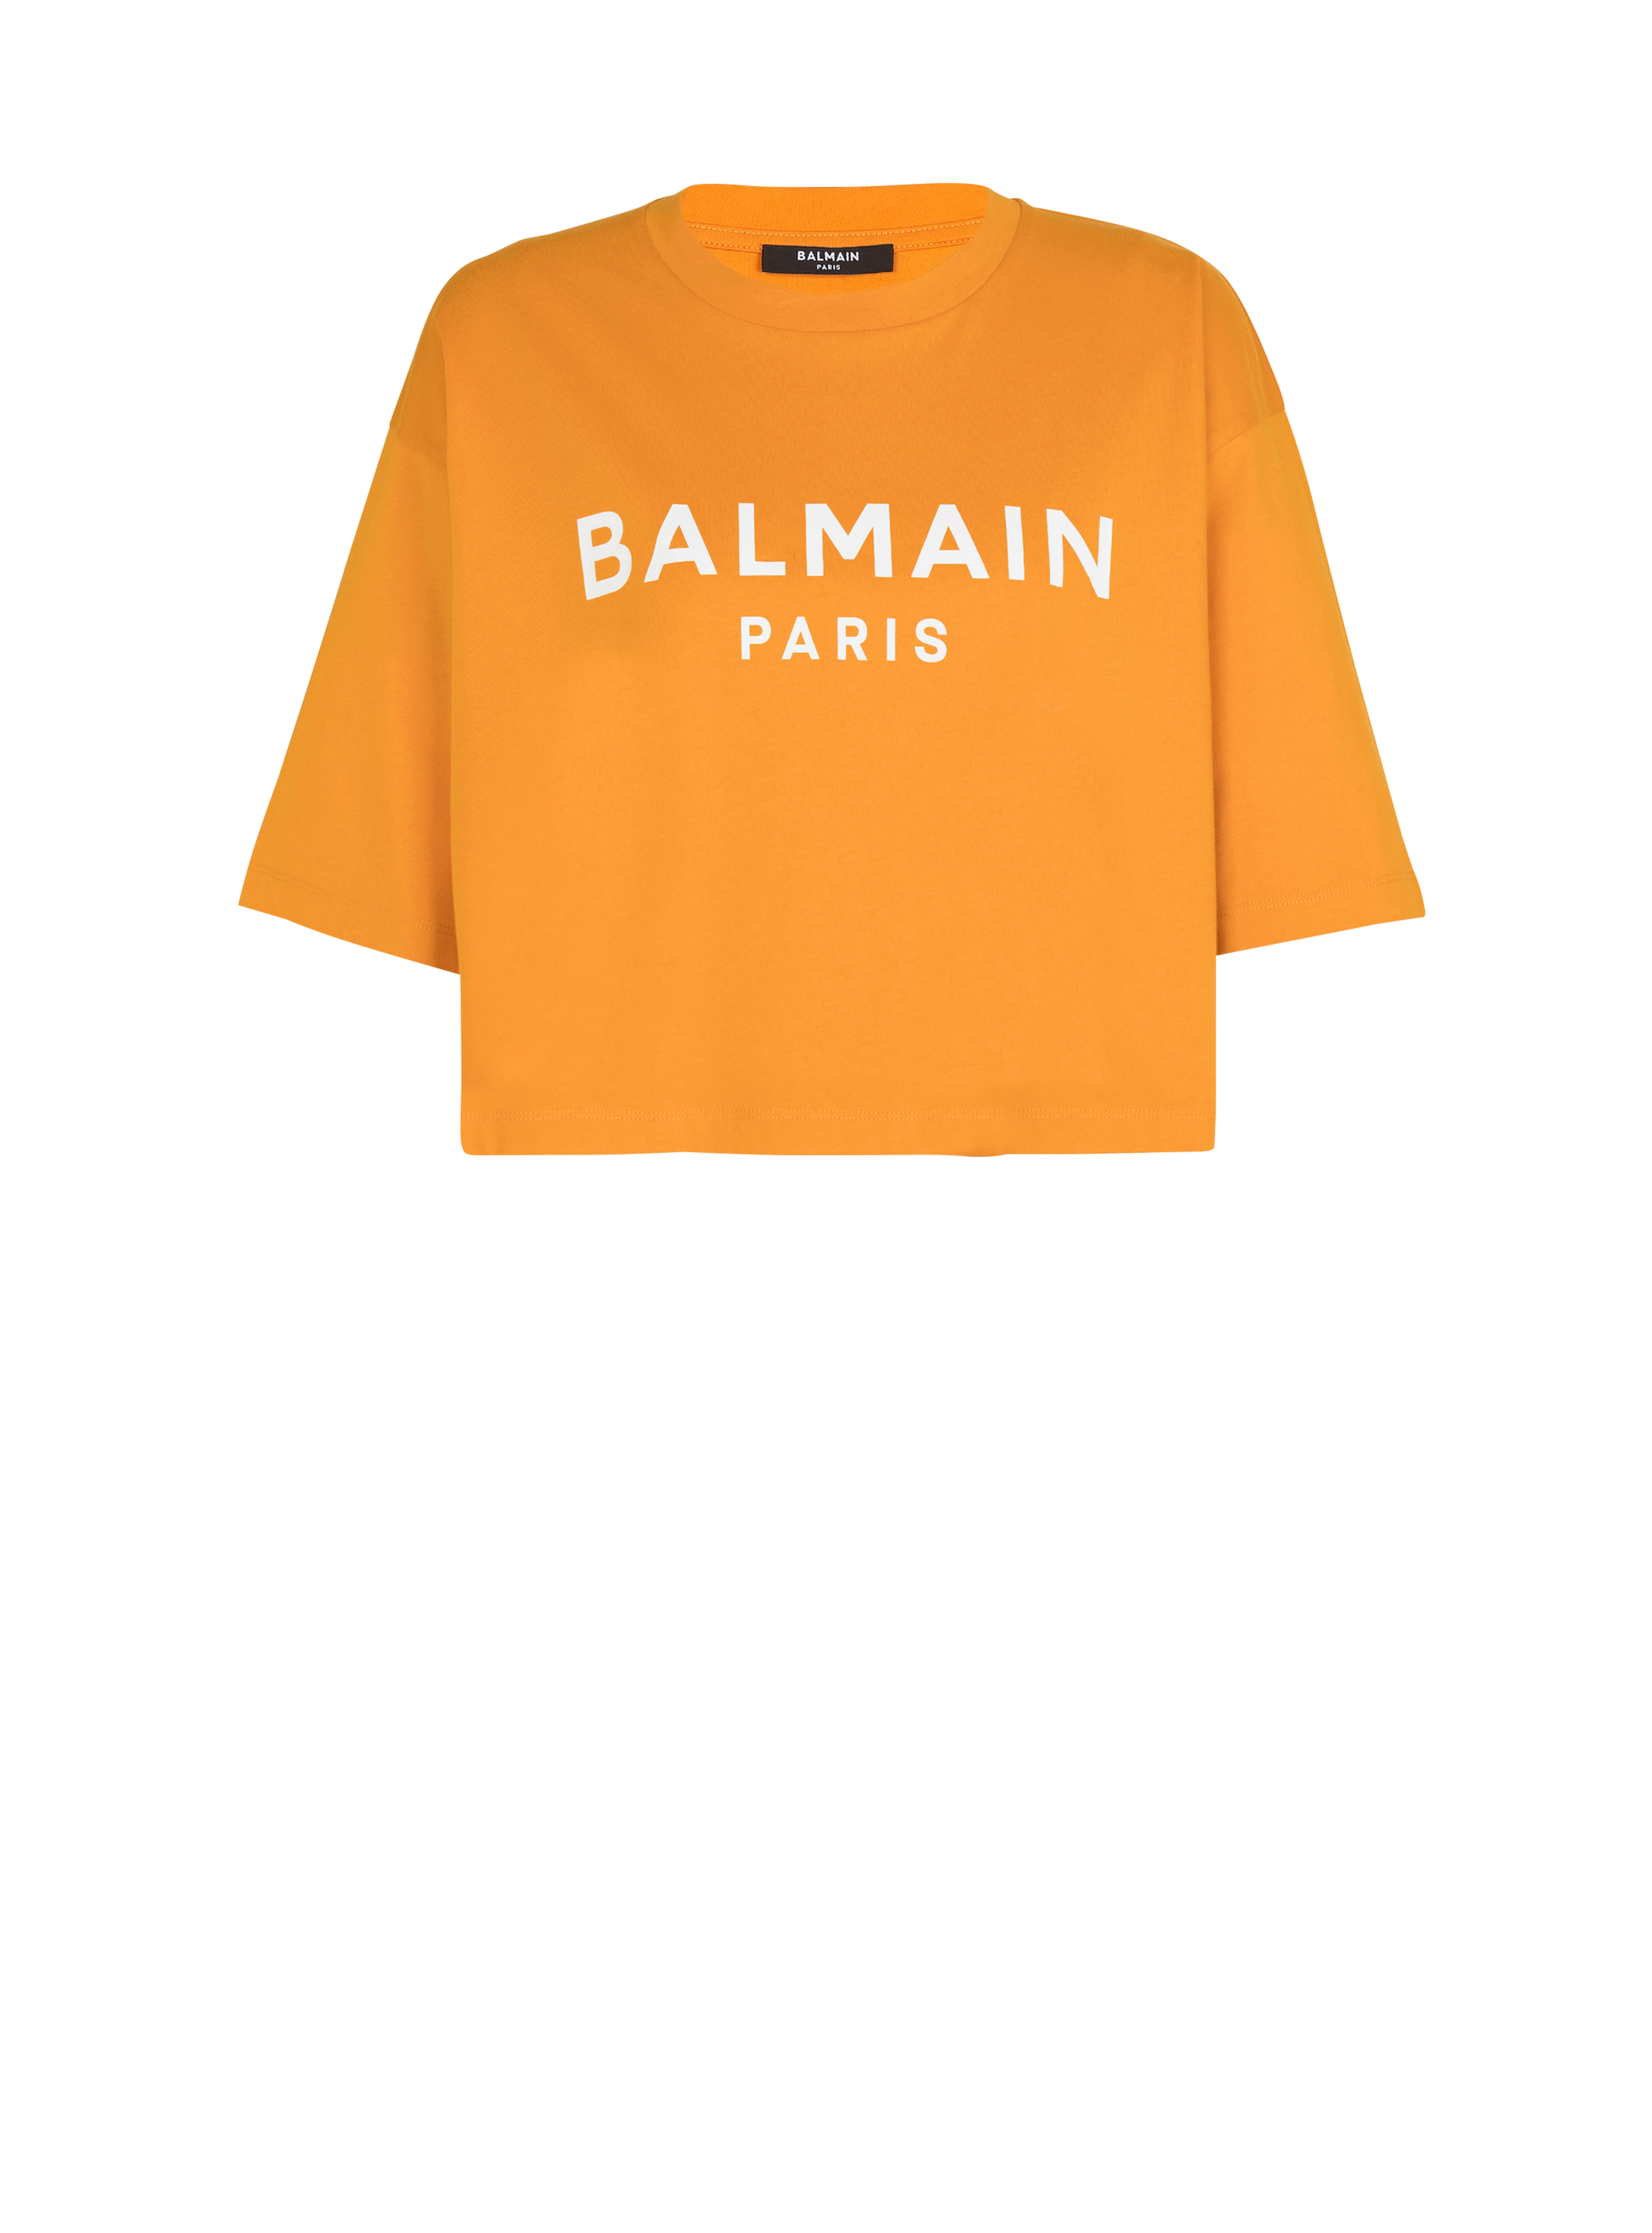 Balmain巴尔曼标志印花环保设计棉质T恤, orange